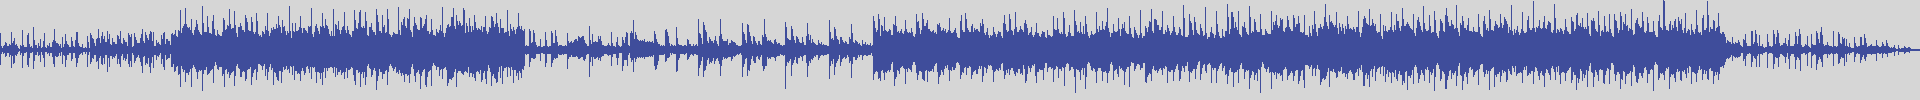 noclouds_chillout [NOC021] Cardinal Points - Limits of Time [Manhattan Mix] audio wave form